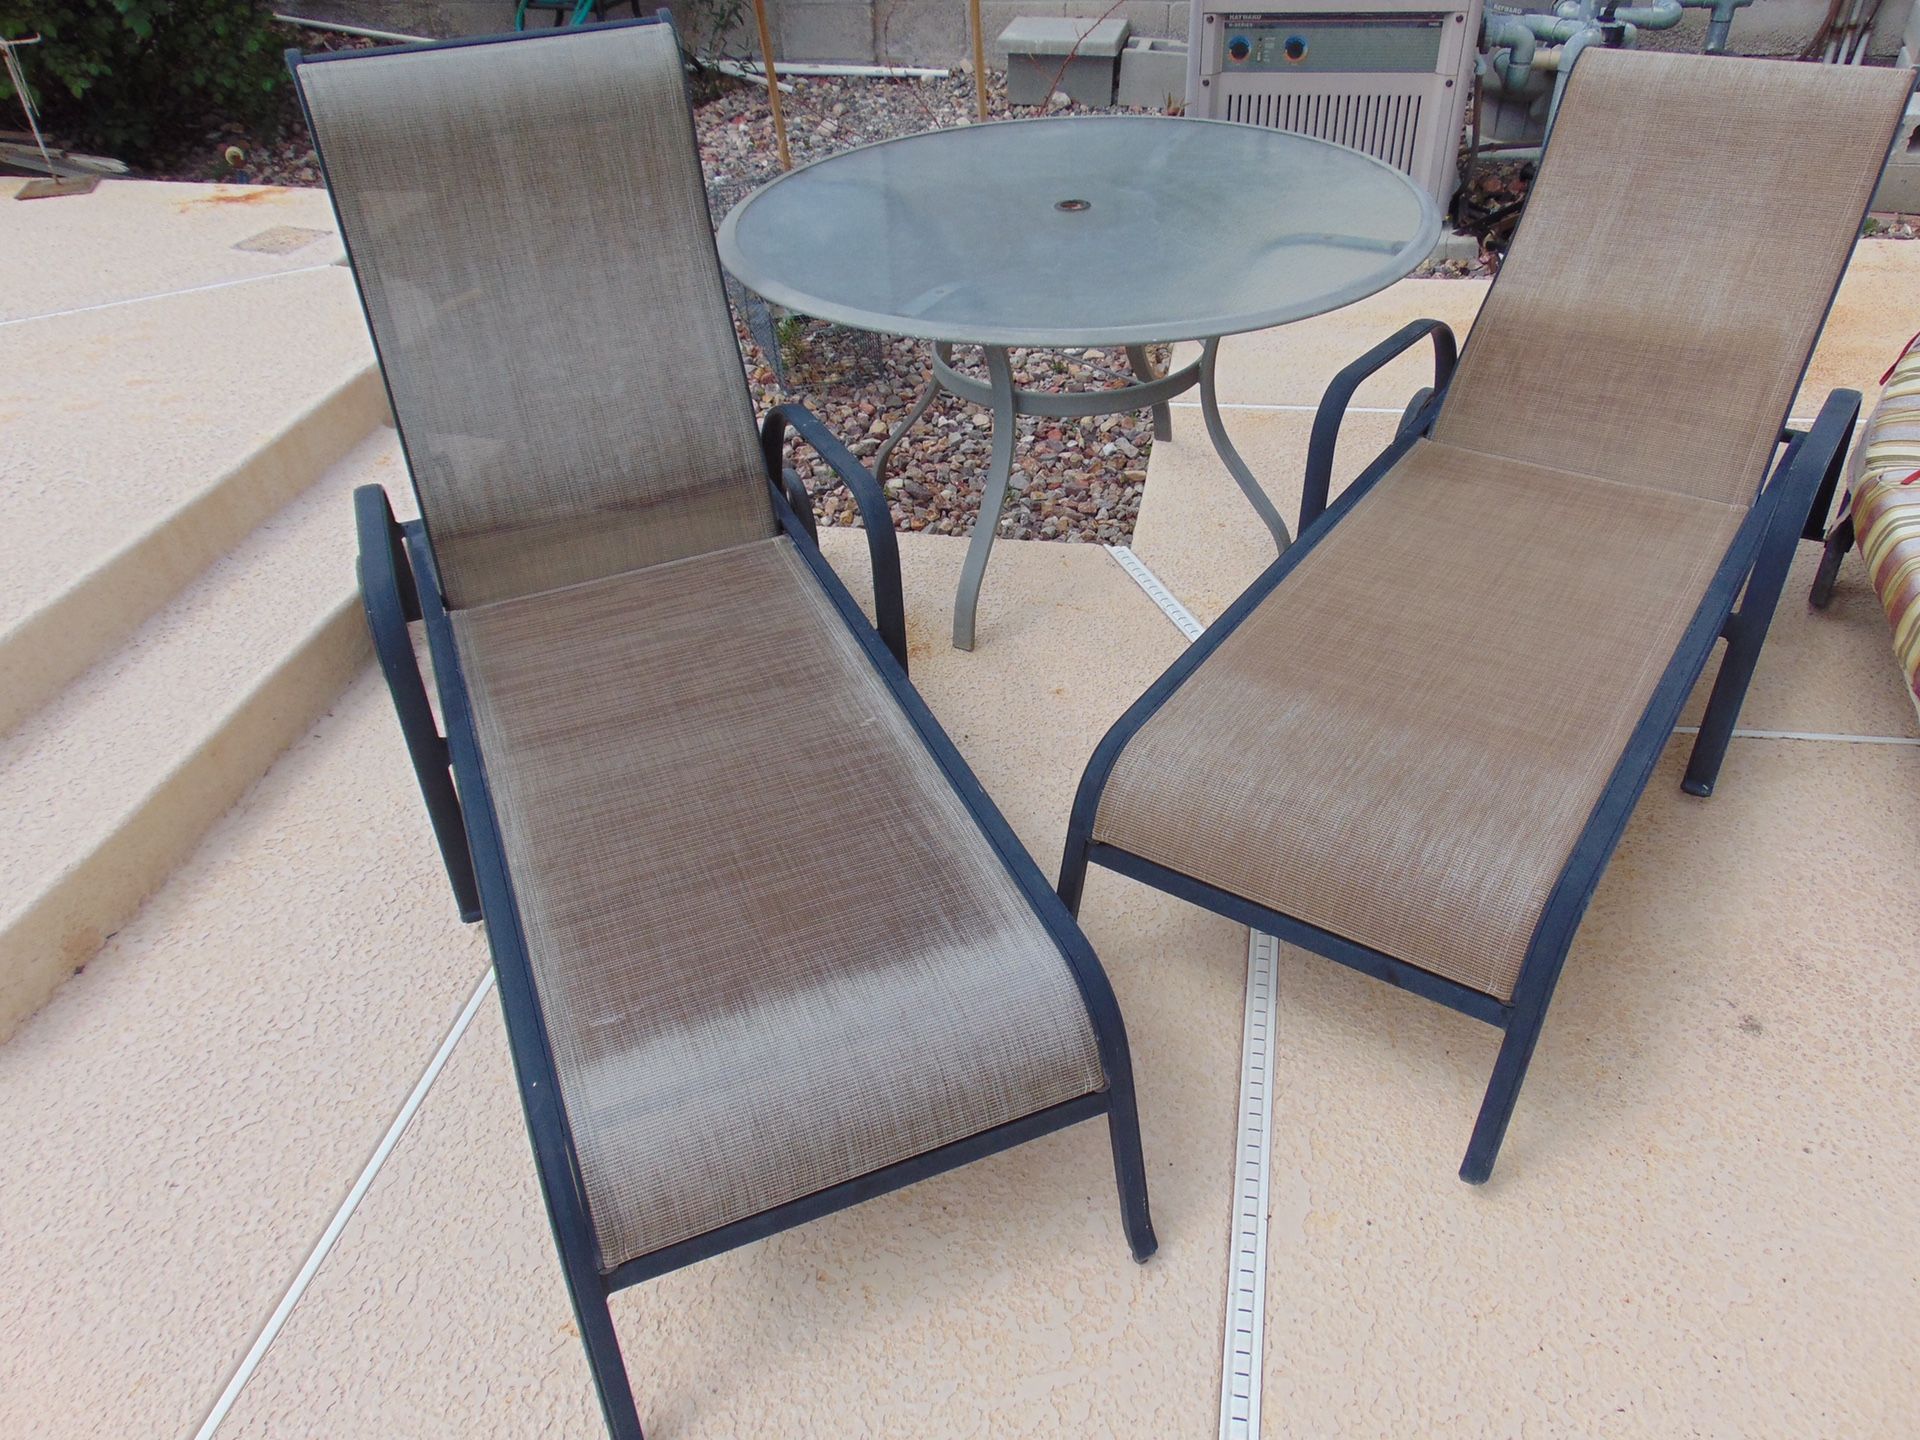 3 pc patio furniture set